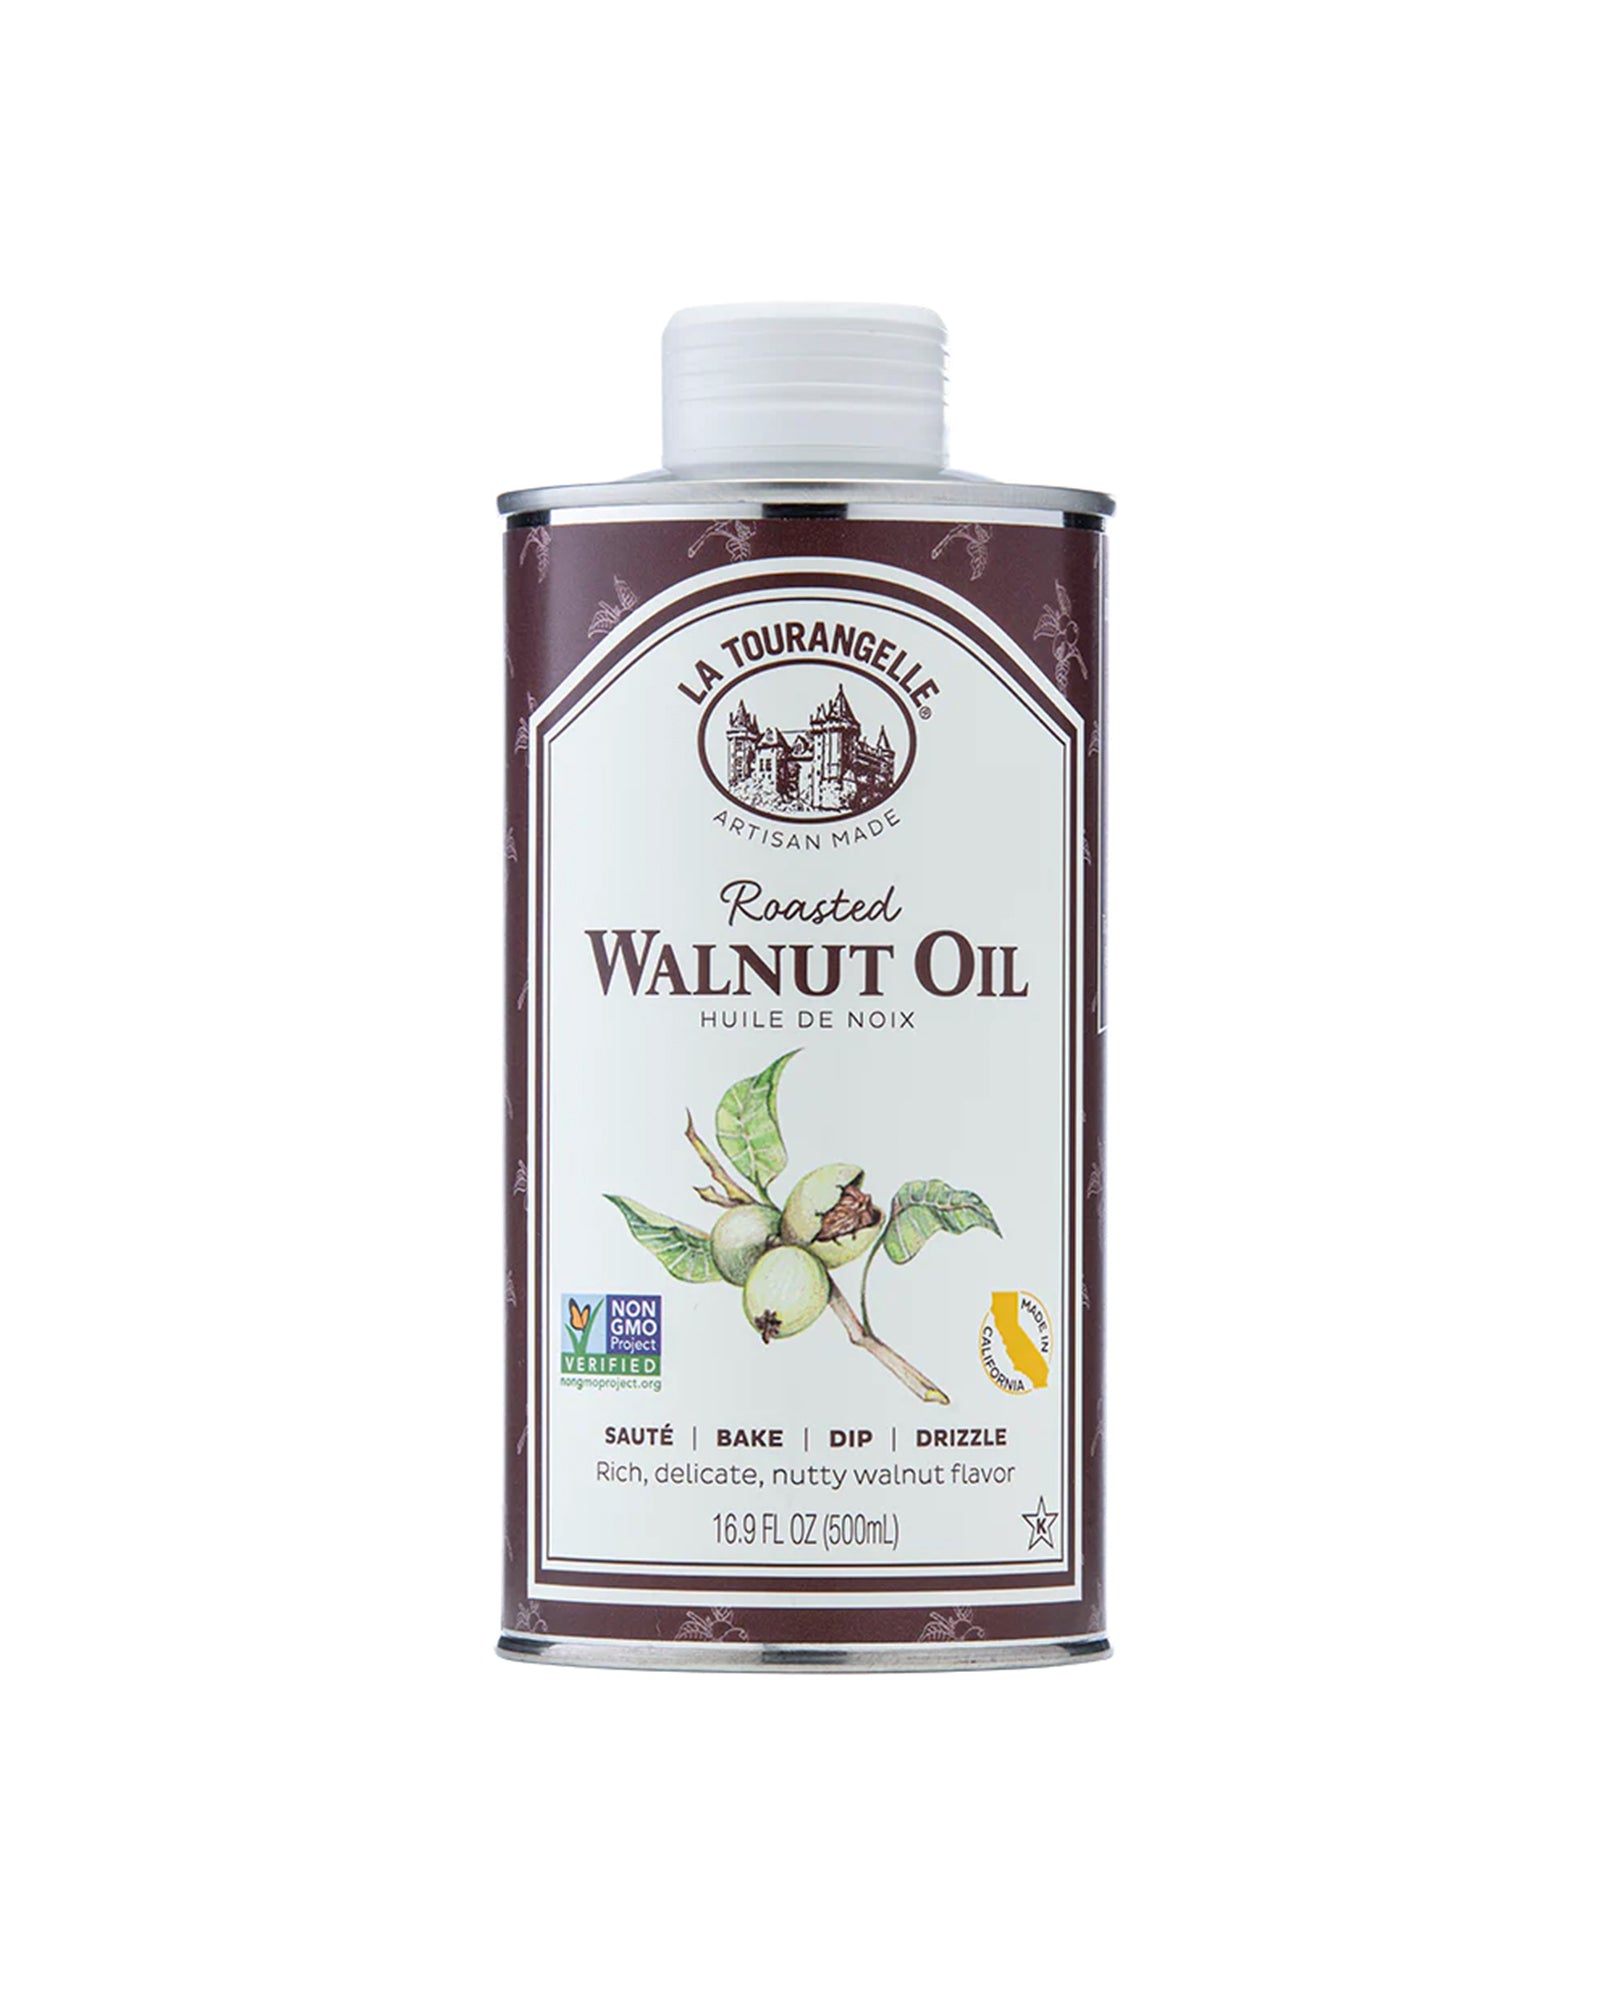 La Tourangelle - Roasted Walnut Oil / 16.9 oz.